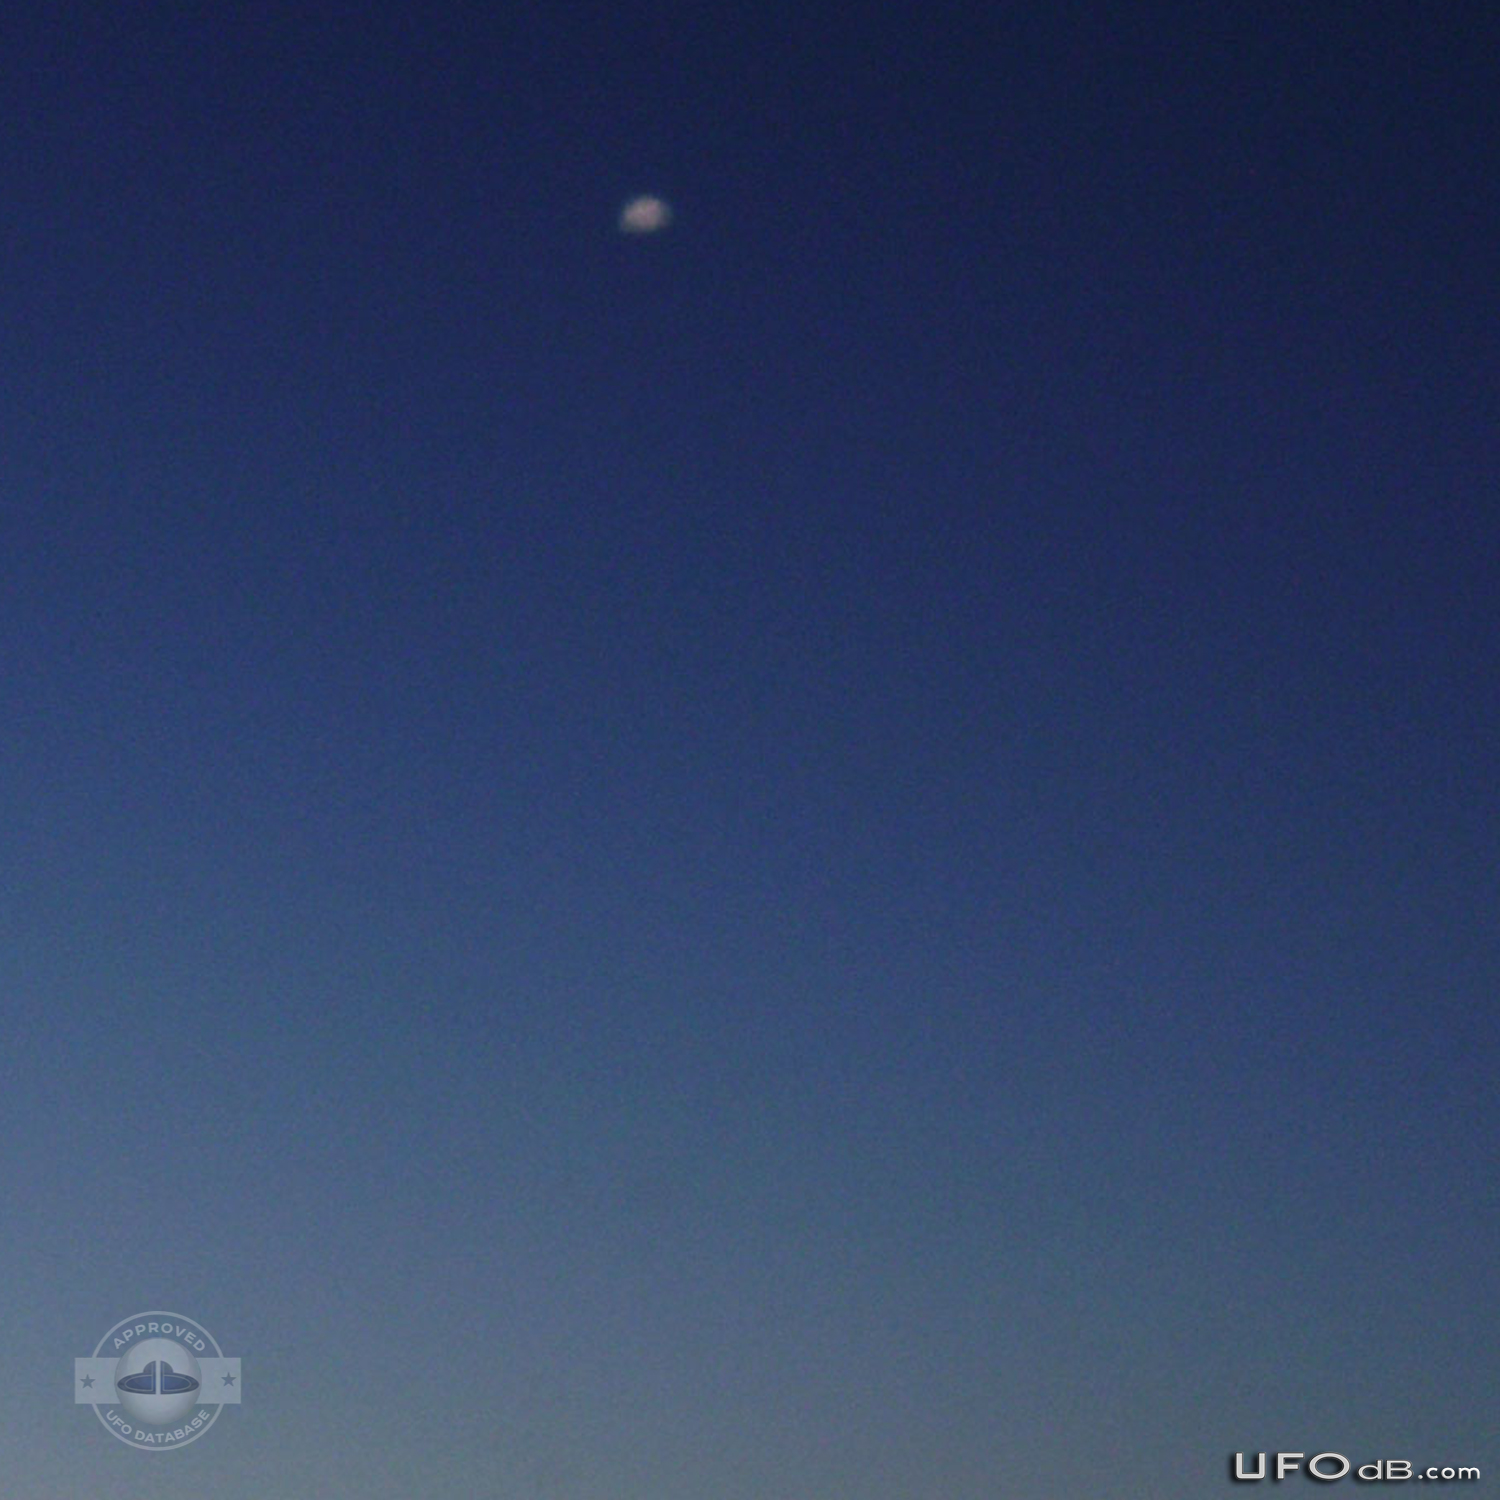 At dawn over Windsor - Bright UFO near the Detroit River | Canada 2011 UFO Picture #261-2